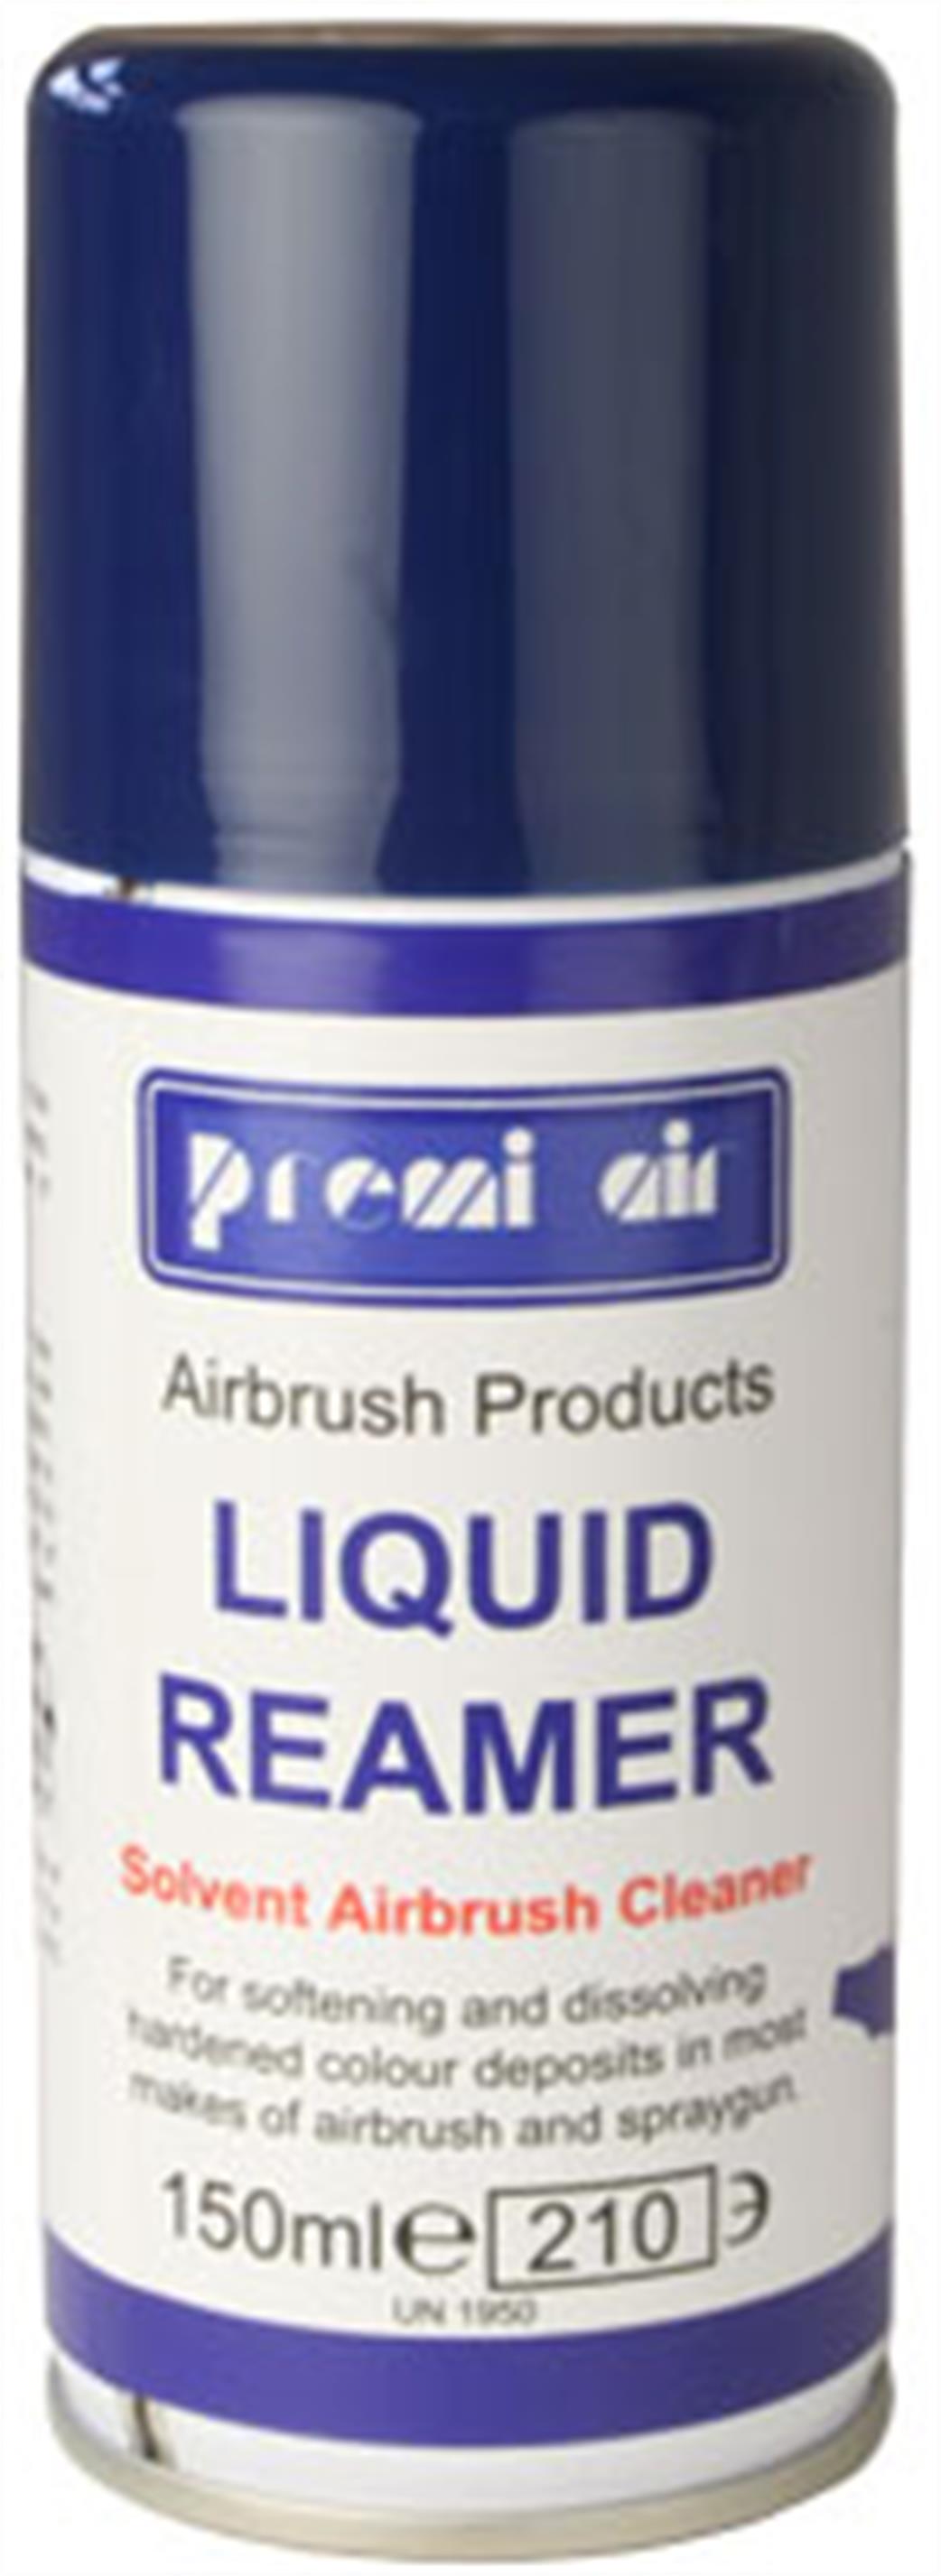 Premi Air  85KD10 Liquid Reamer Solvent Airbrush Cleaner 150ml Aerosol